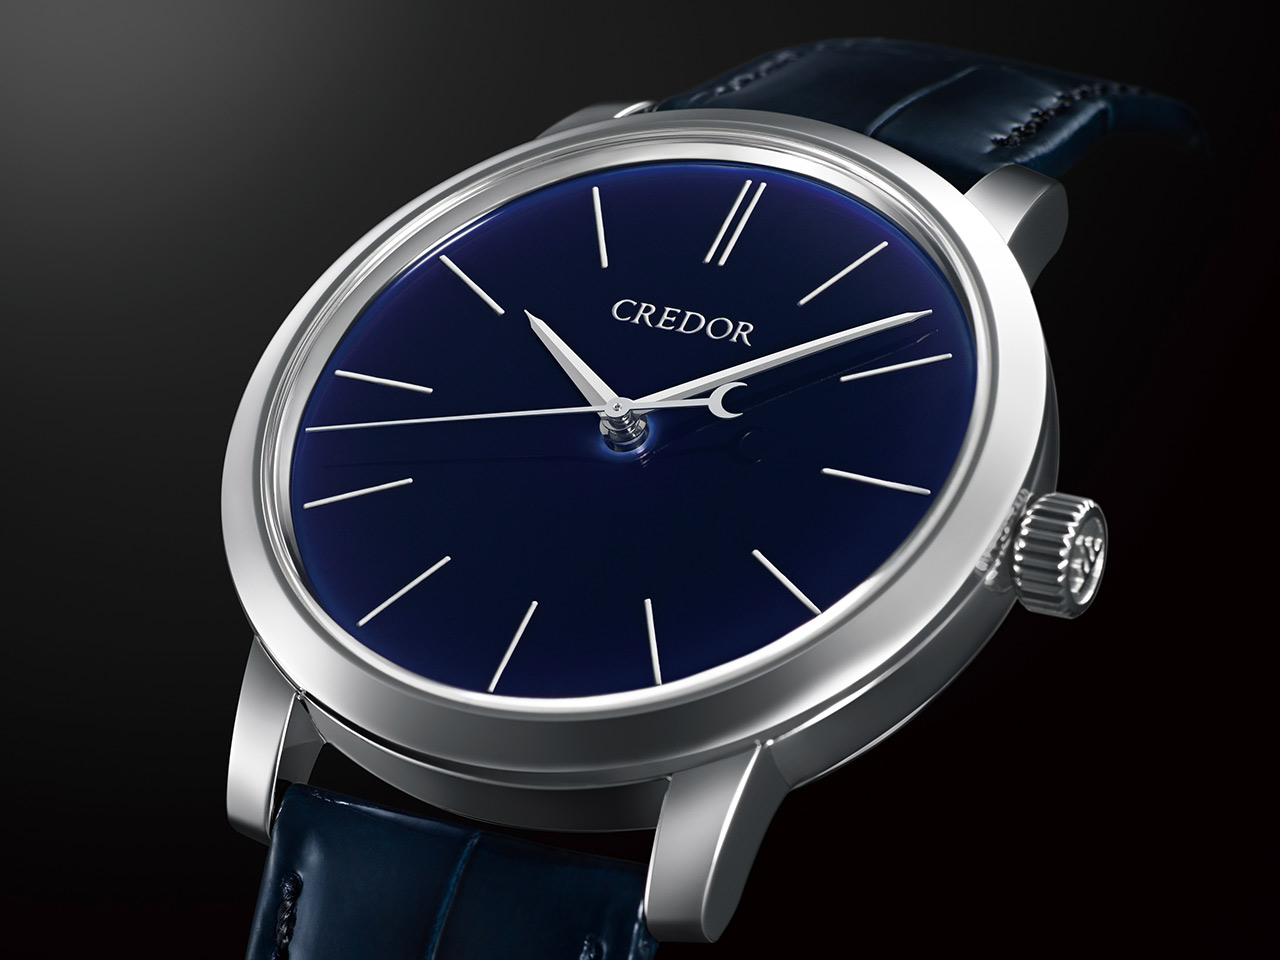 Introducing The Credor Eichi II Blue Edition GBLT997 Watch